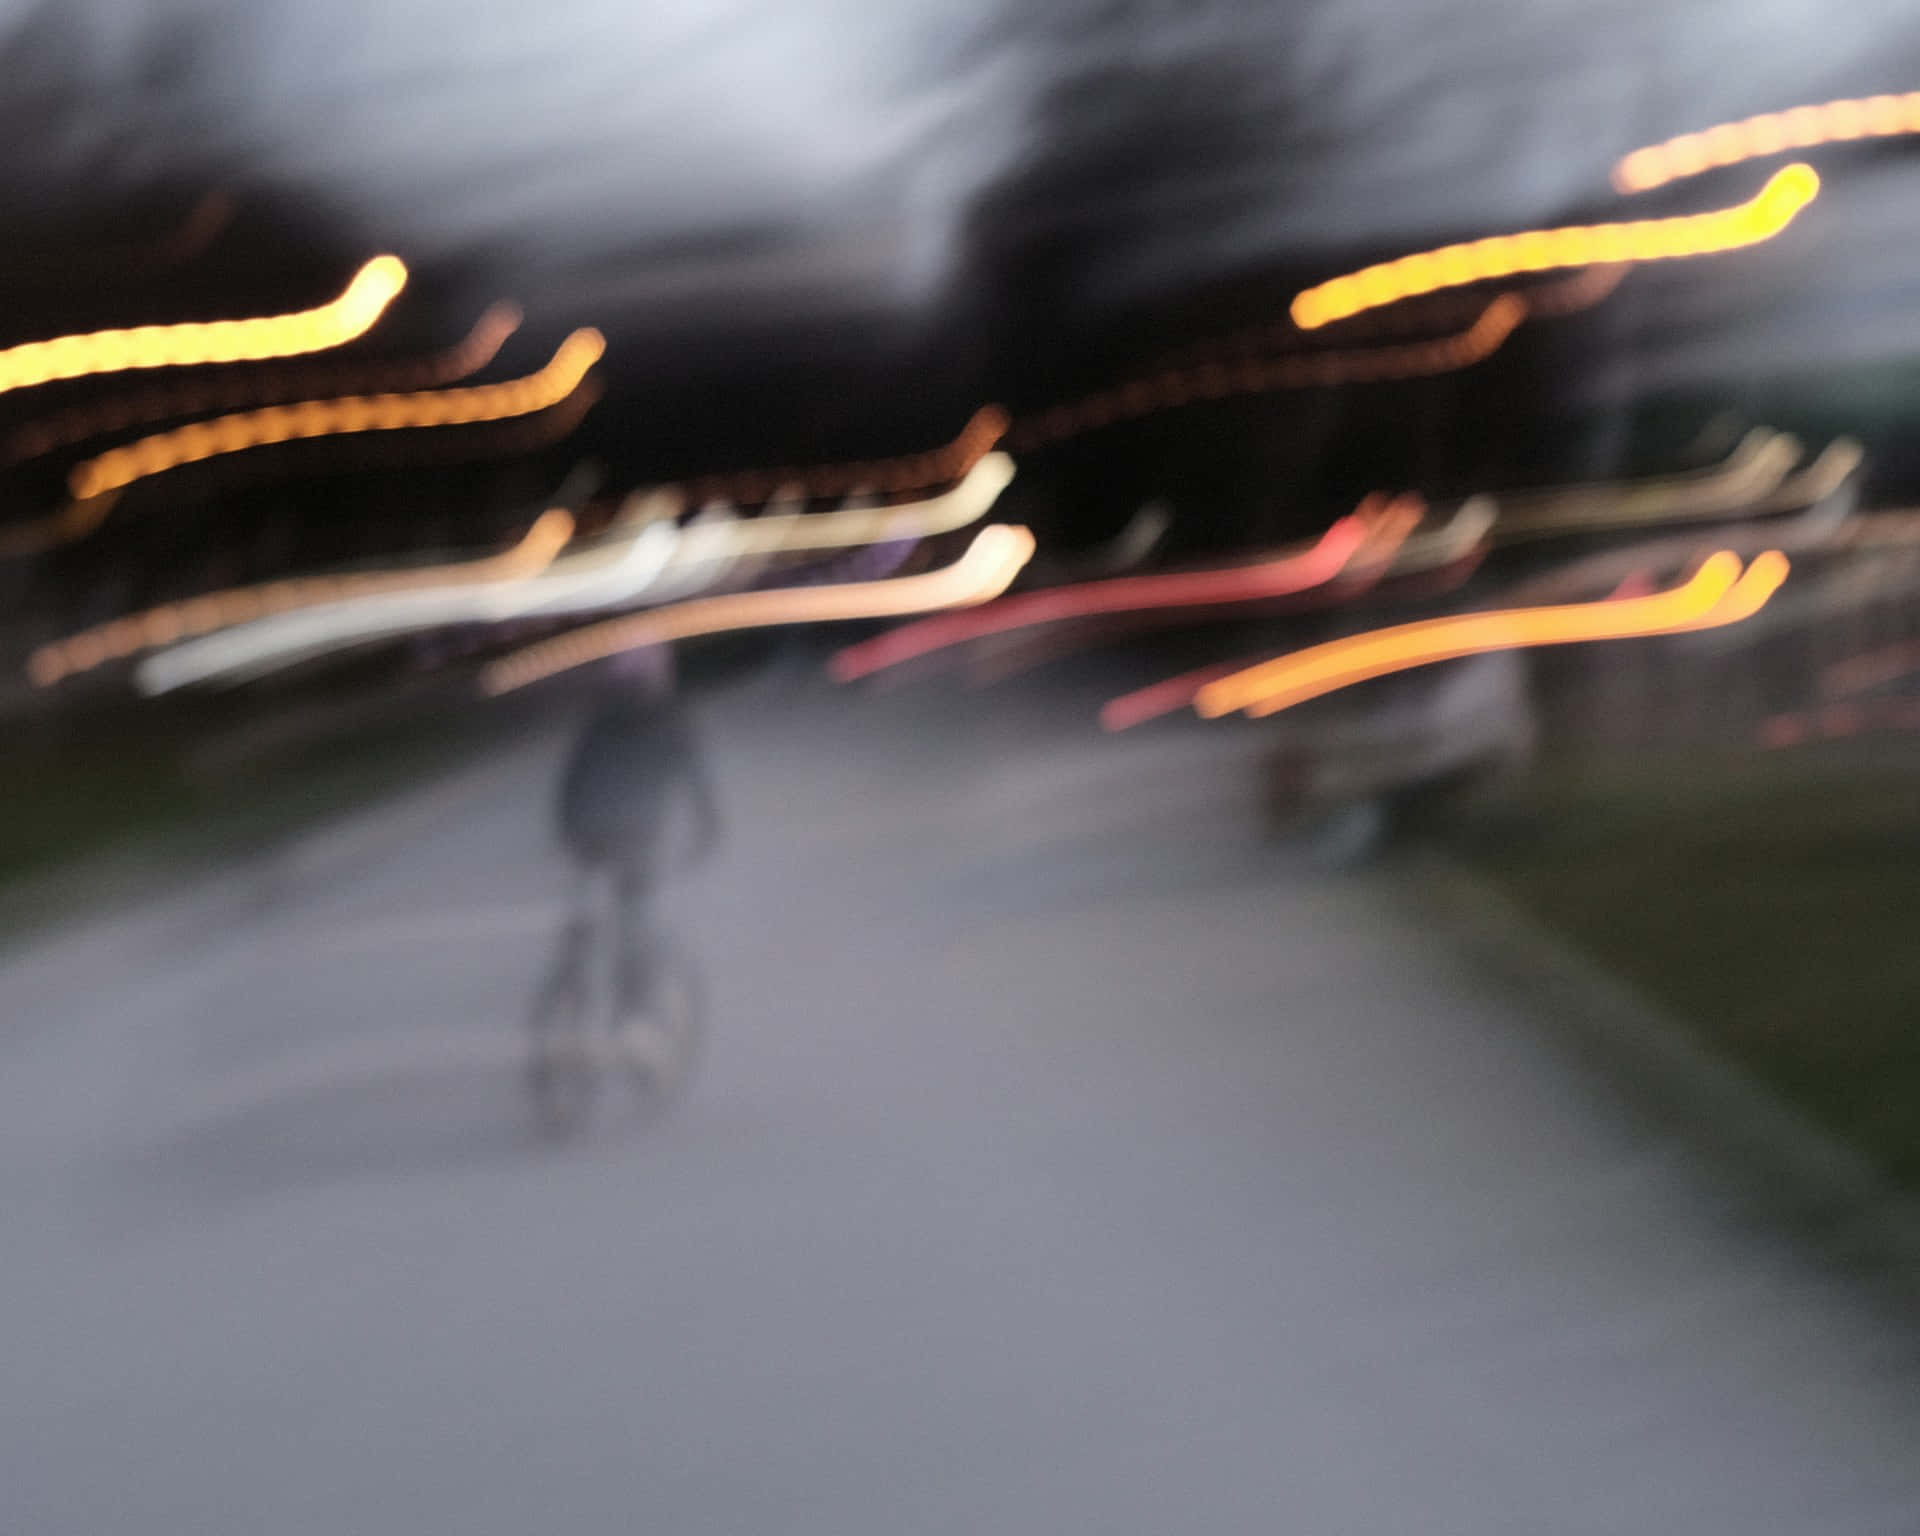 Blurry Nighttime Biker Grunge Aesthetic.jpg Wallpaper